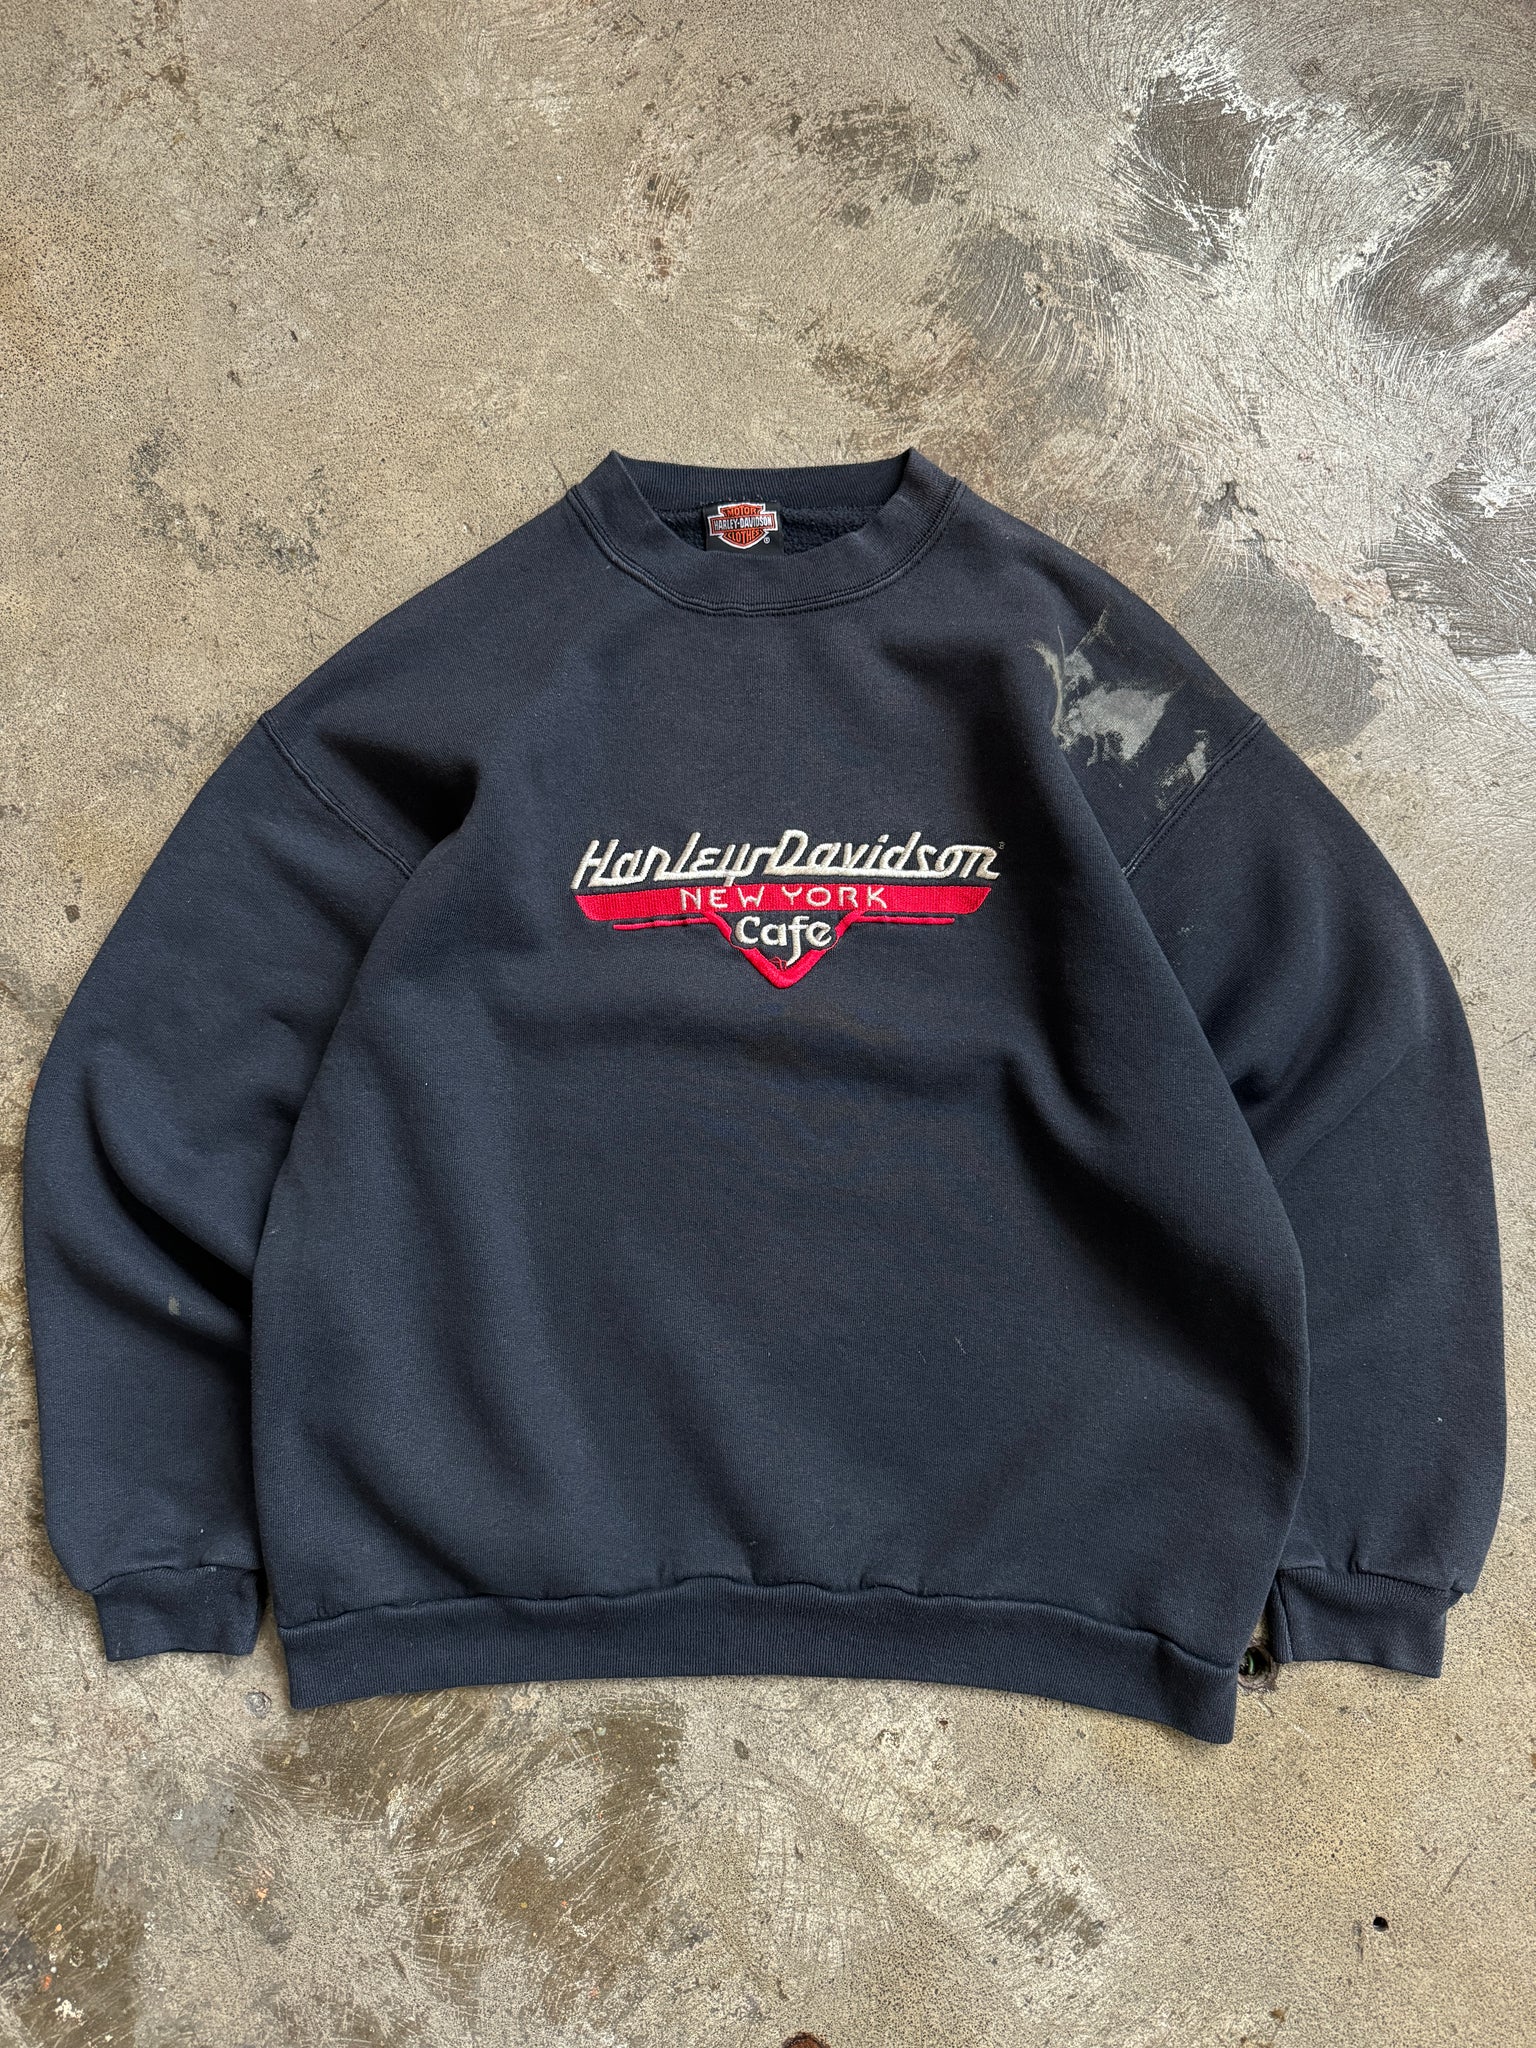 Vintage Harley Davidson Sweatshirt (M)